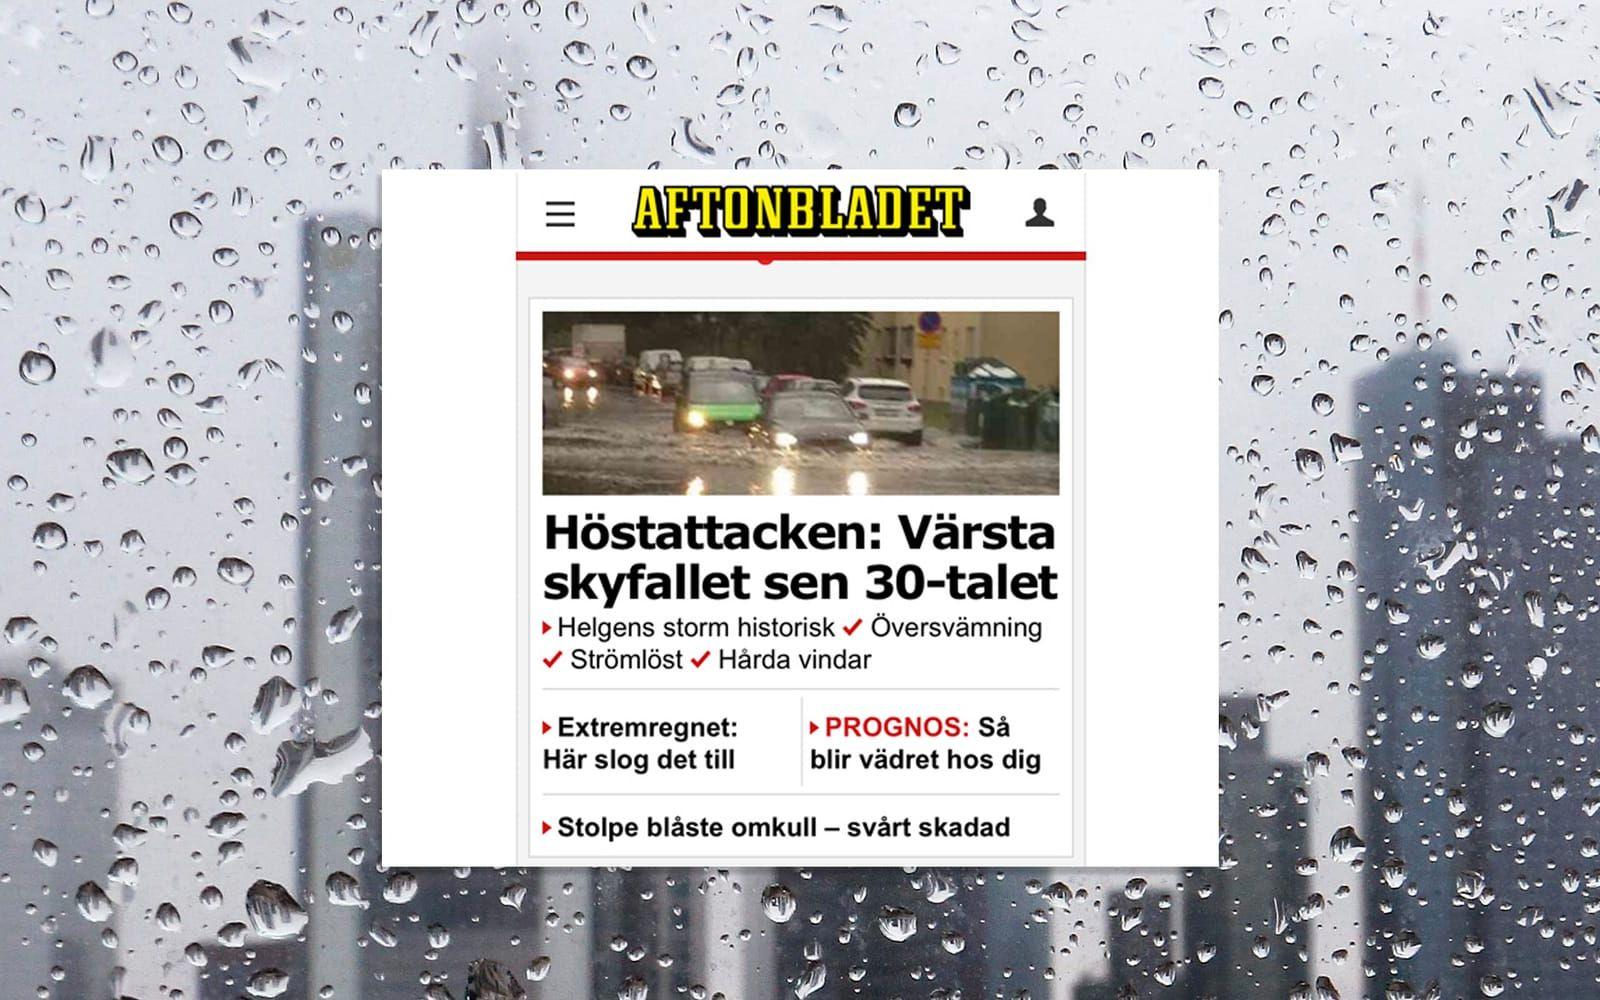 Ondskefullt väder! Foto: TT/Faksimil Aftonbladet.se